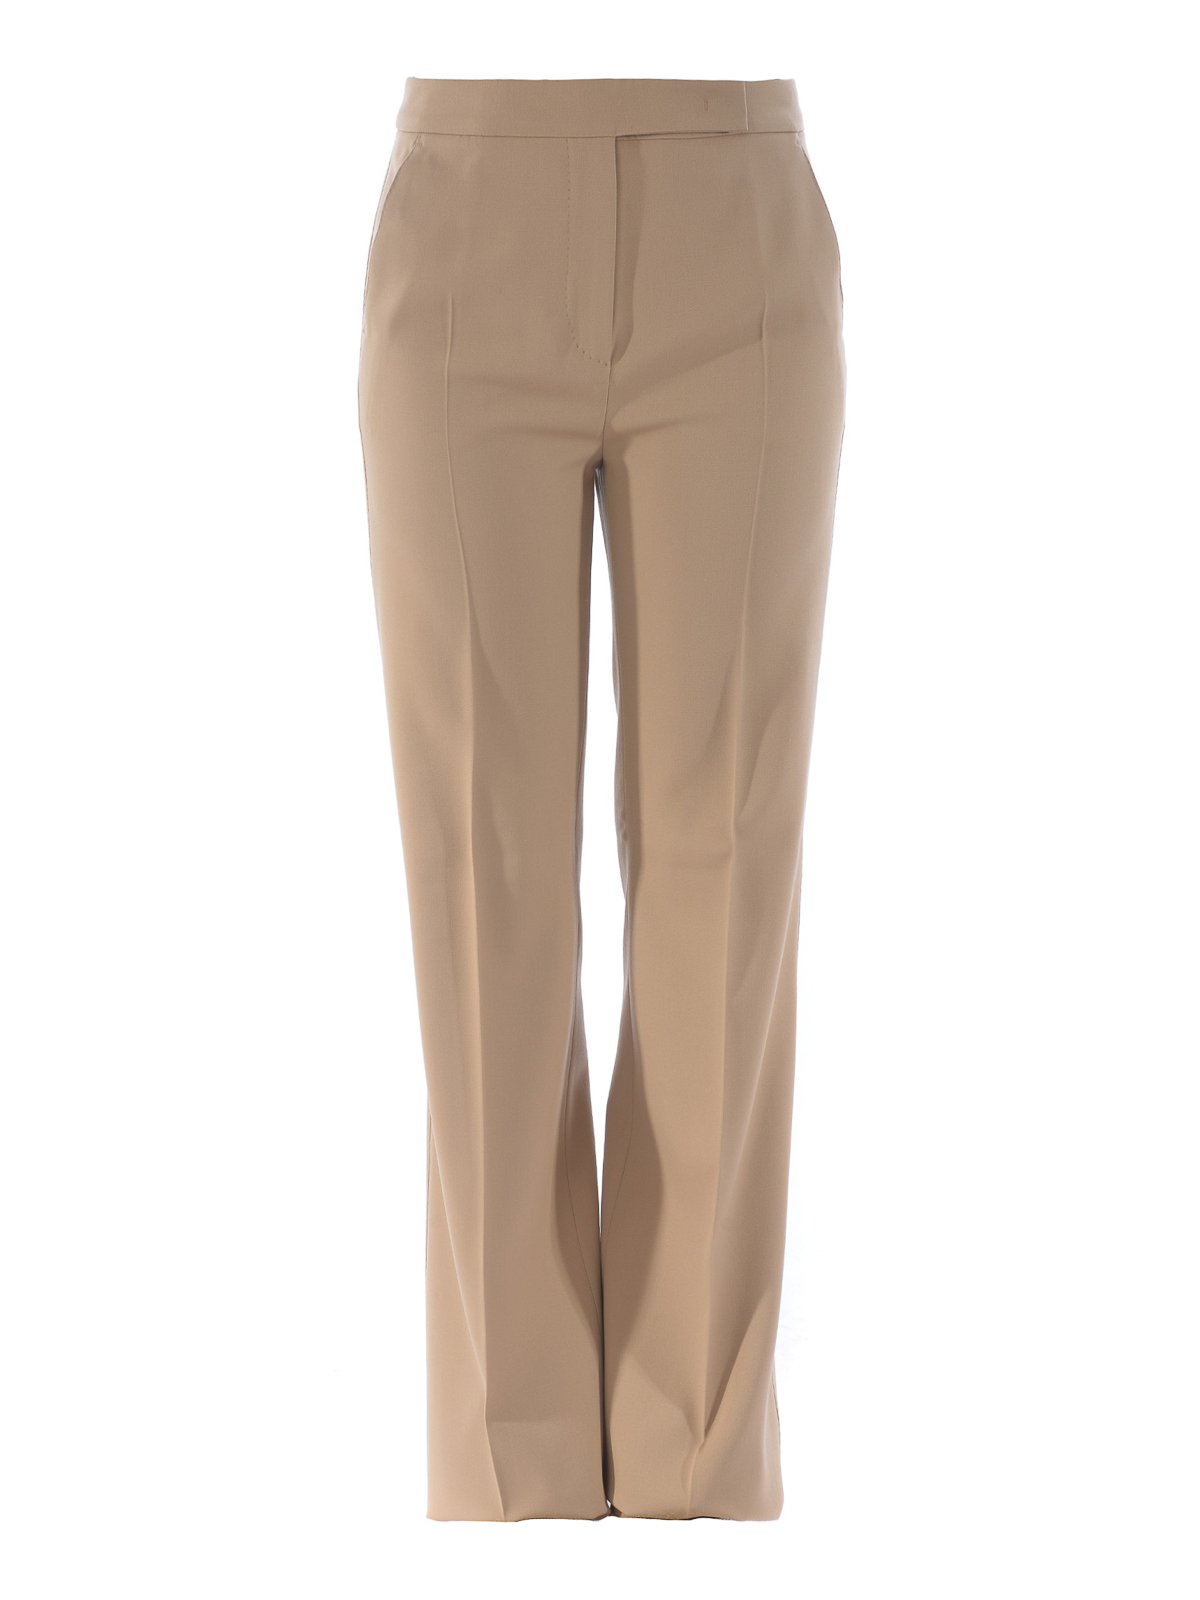 Theory Max C3 Women Pants Size 0 Charcoal Grey Sevona Stretch Wool Trouser  $255 | eBay